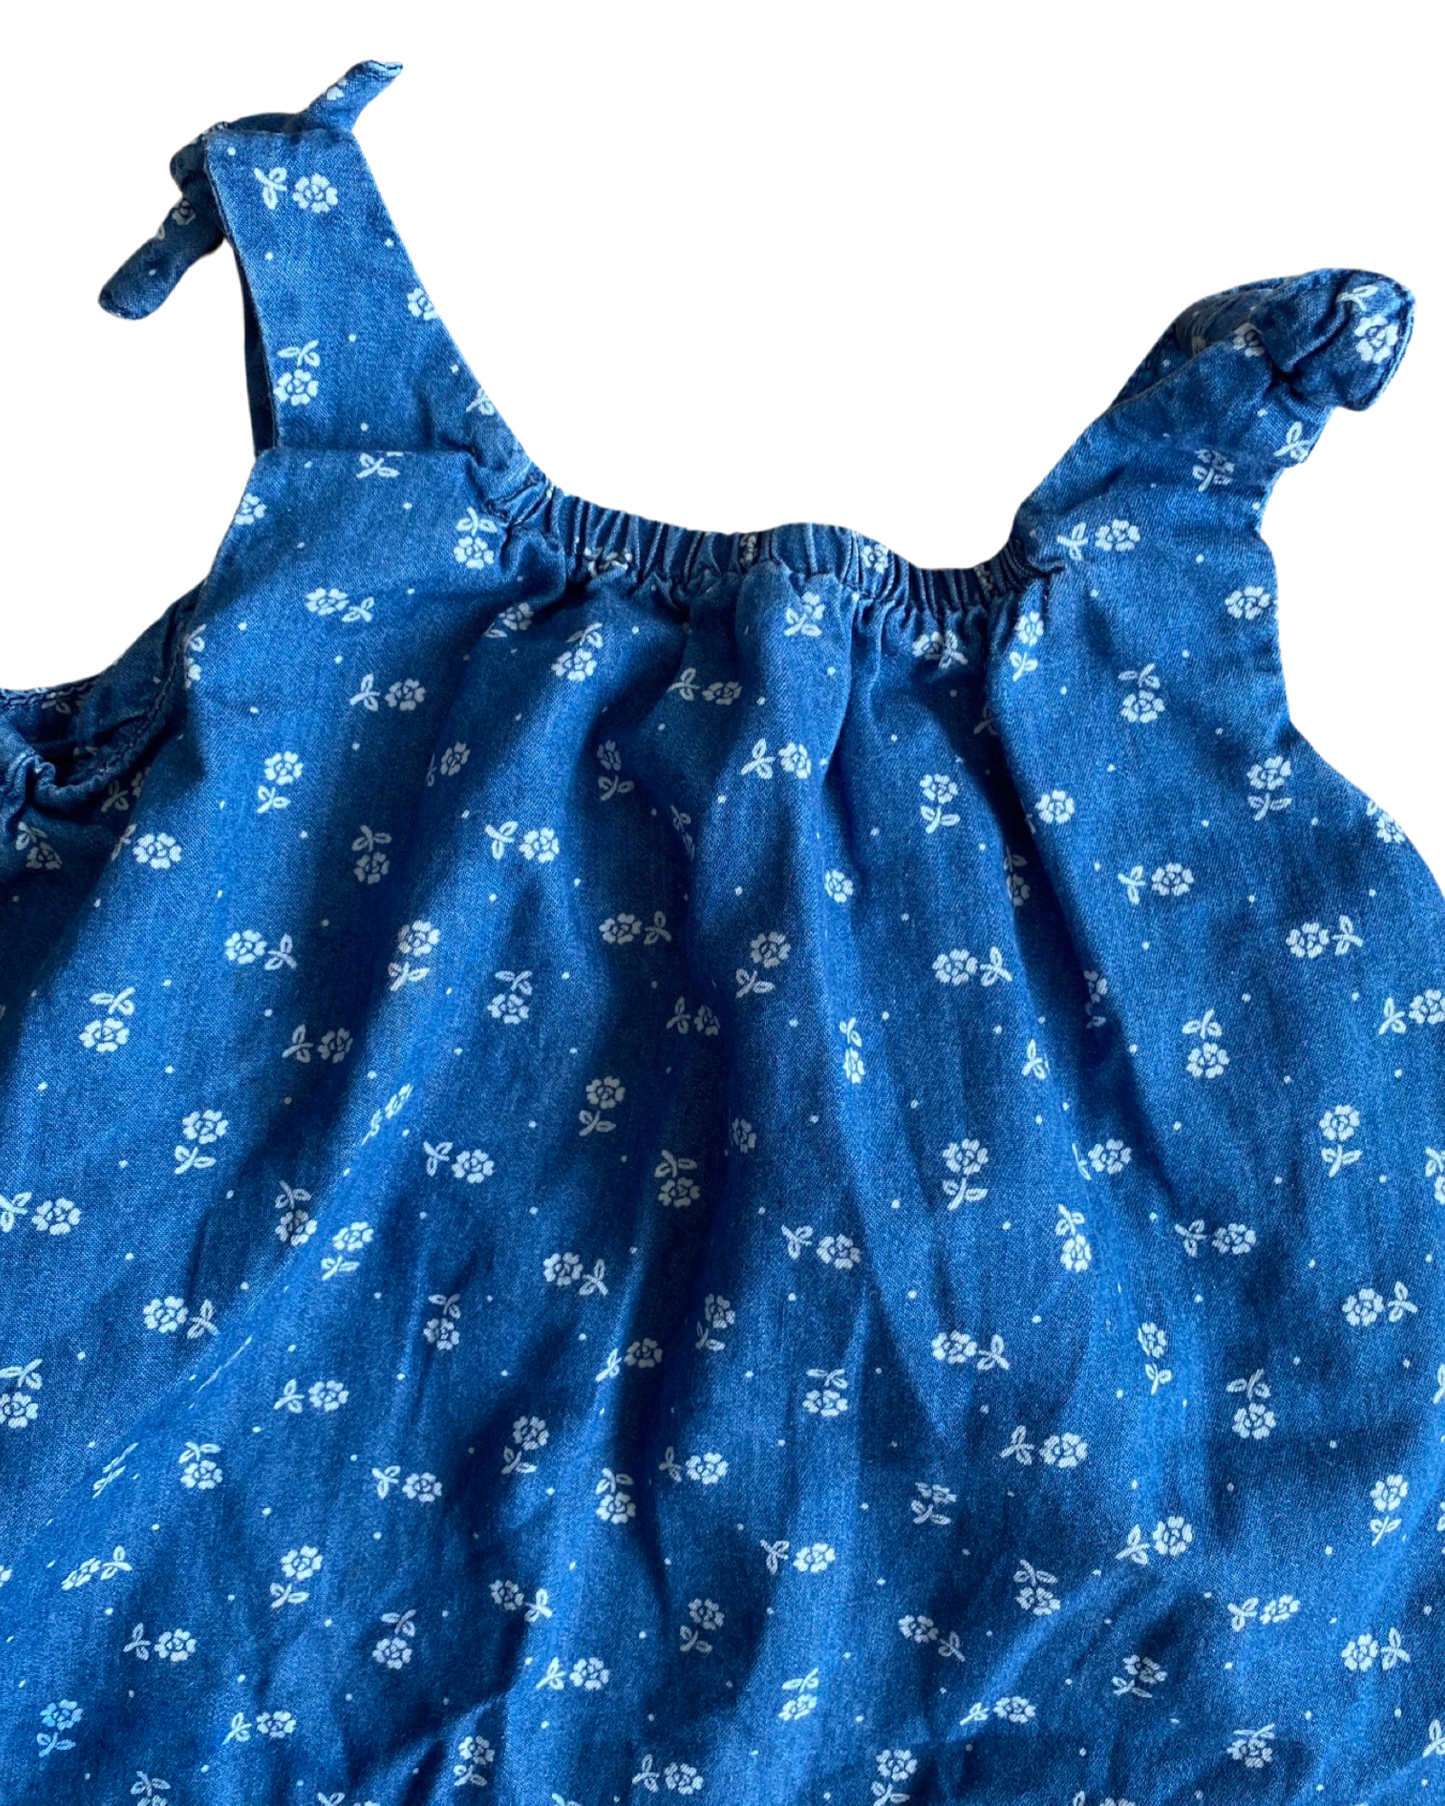 Baby Gap denim floral printed dress (2-3yrs)